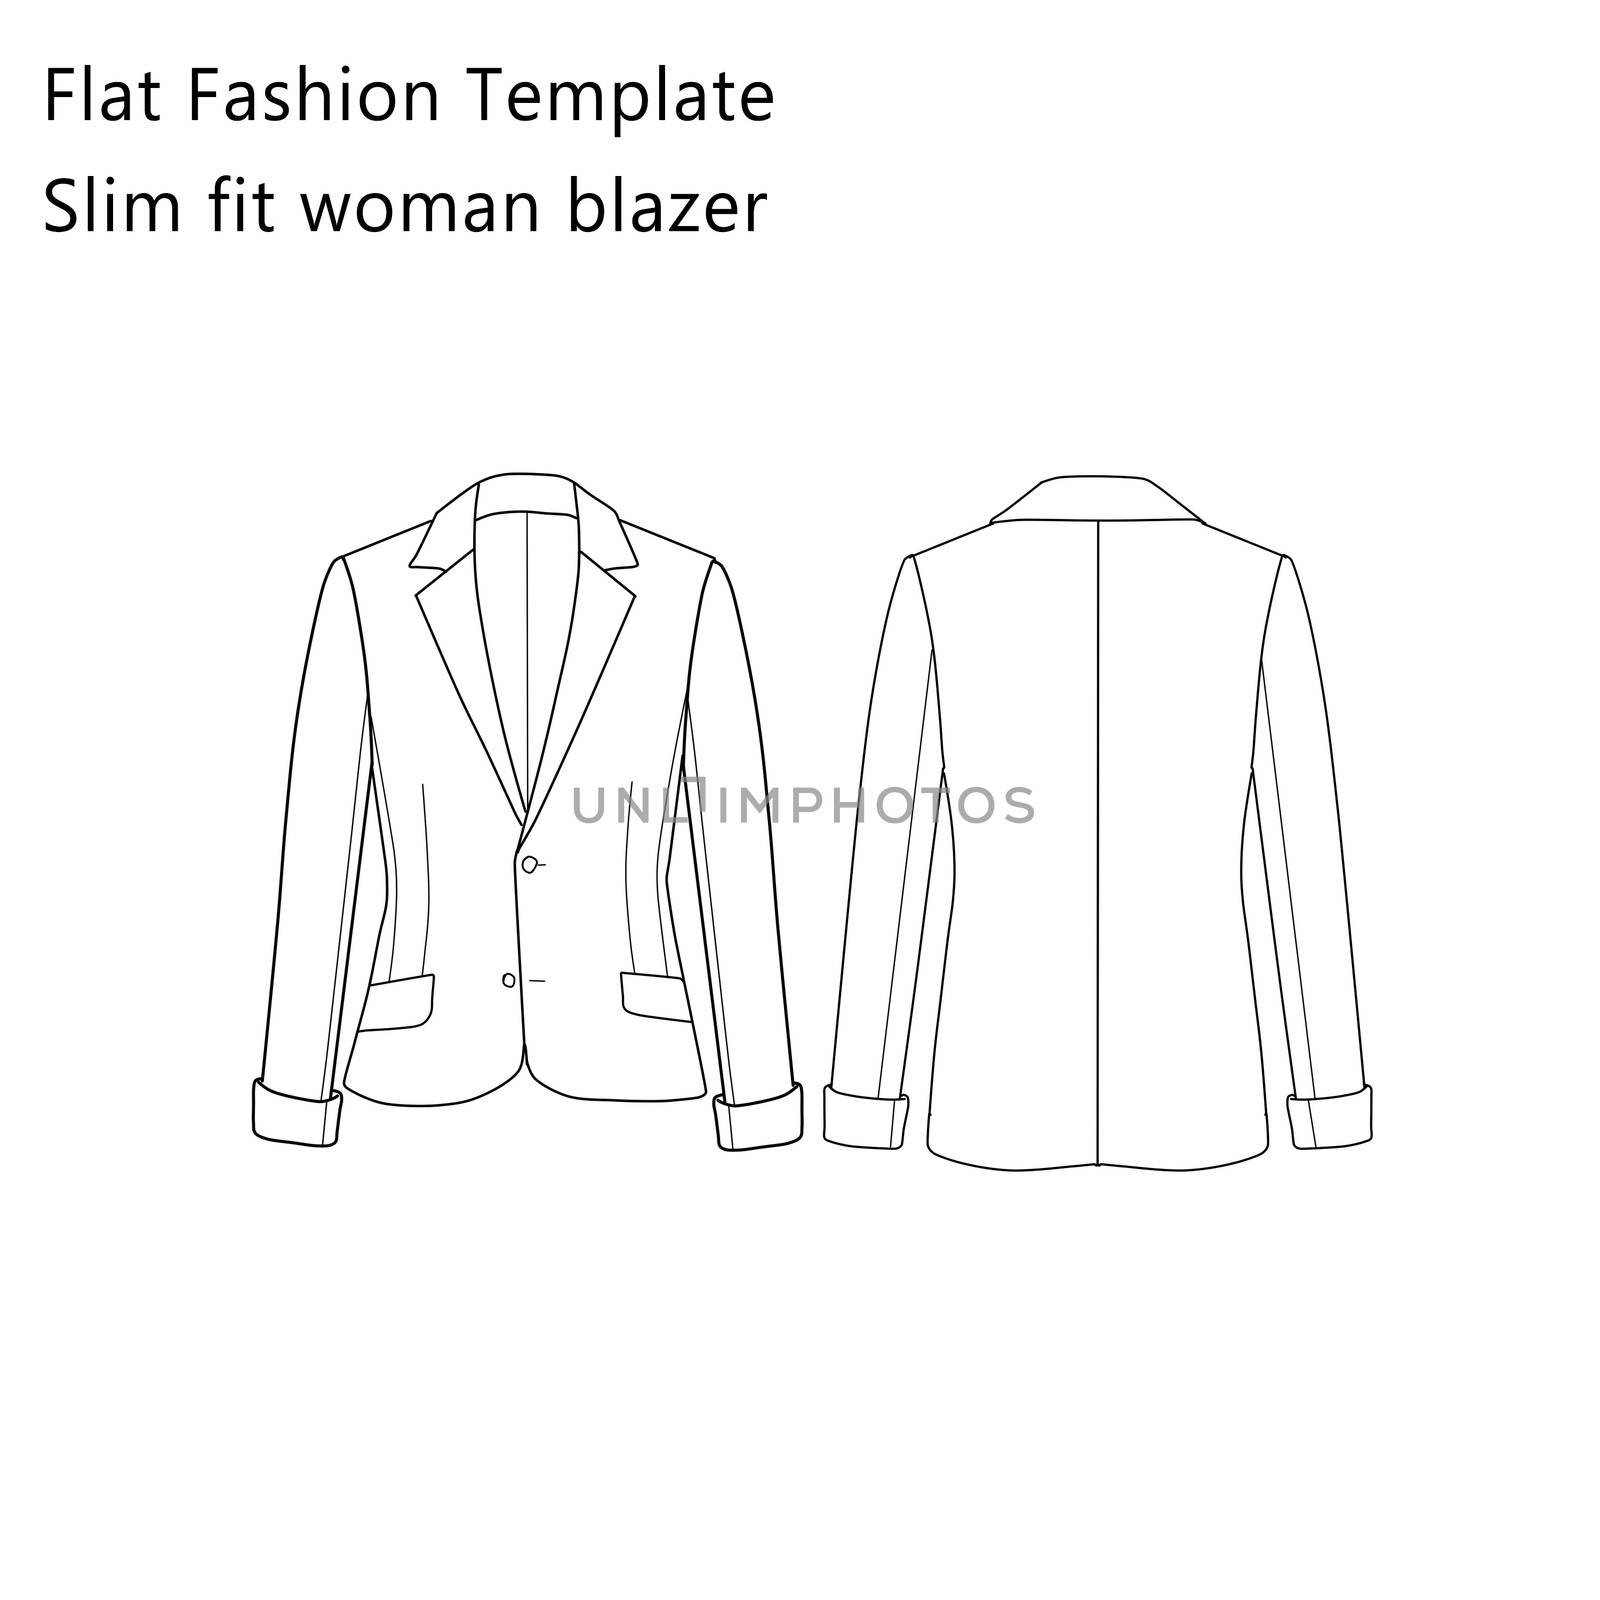 Flat Fashion template - Slim Fit Woman Blazer by GGillustrations